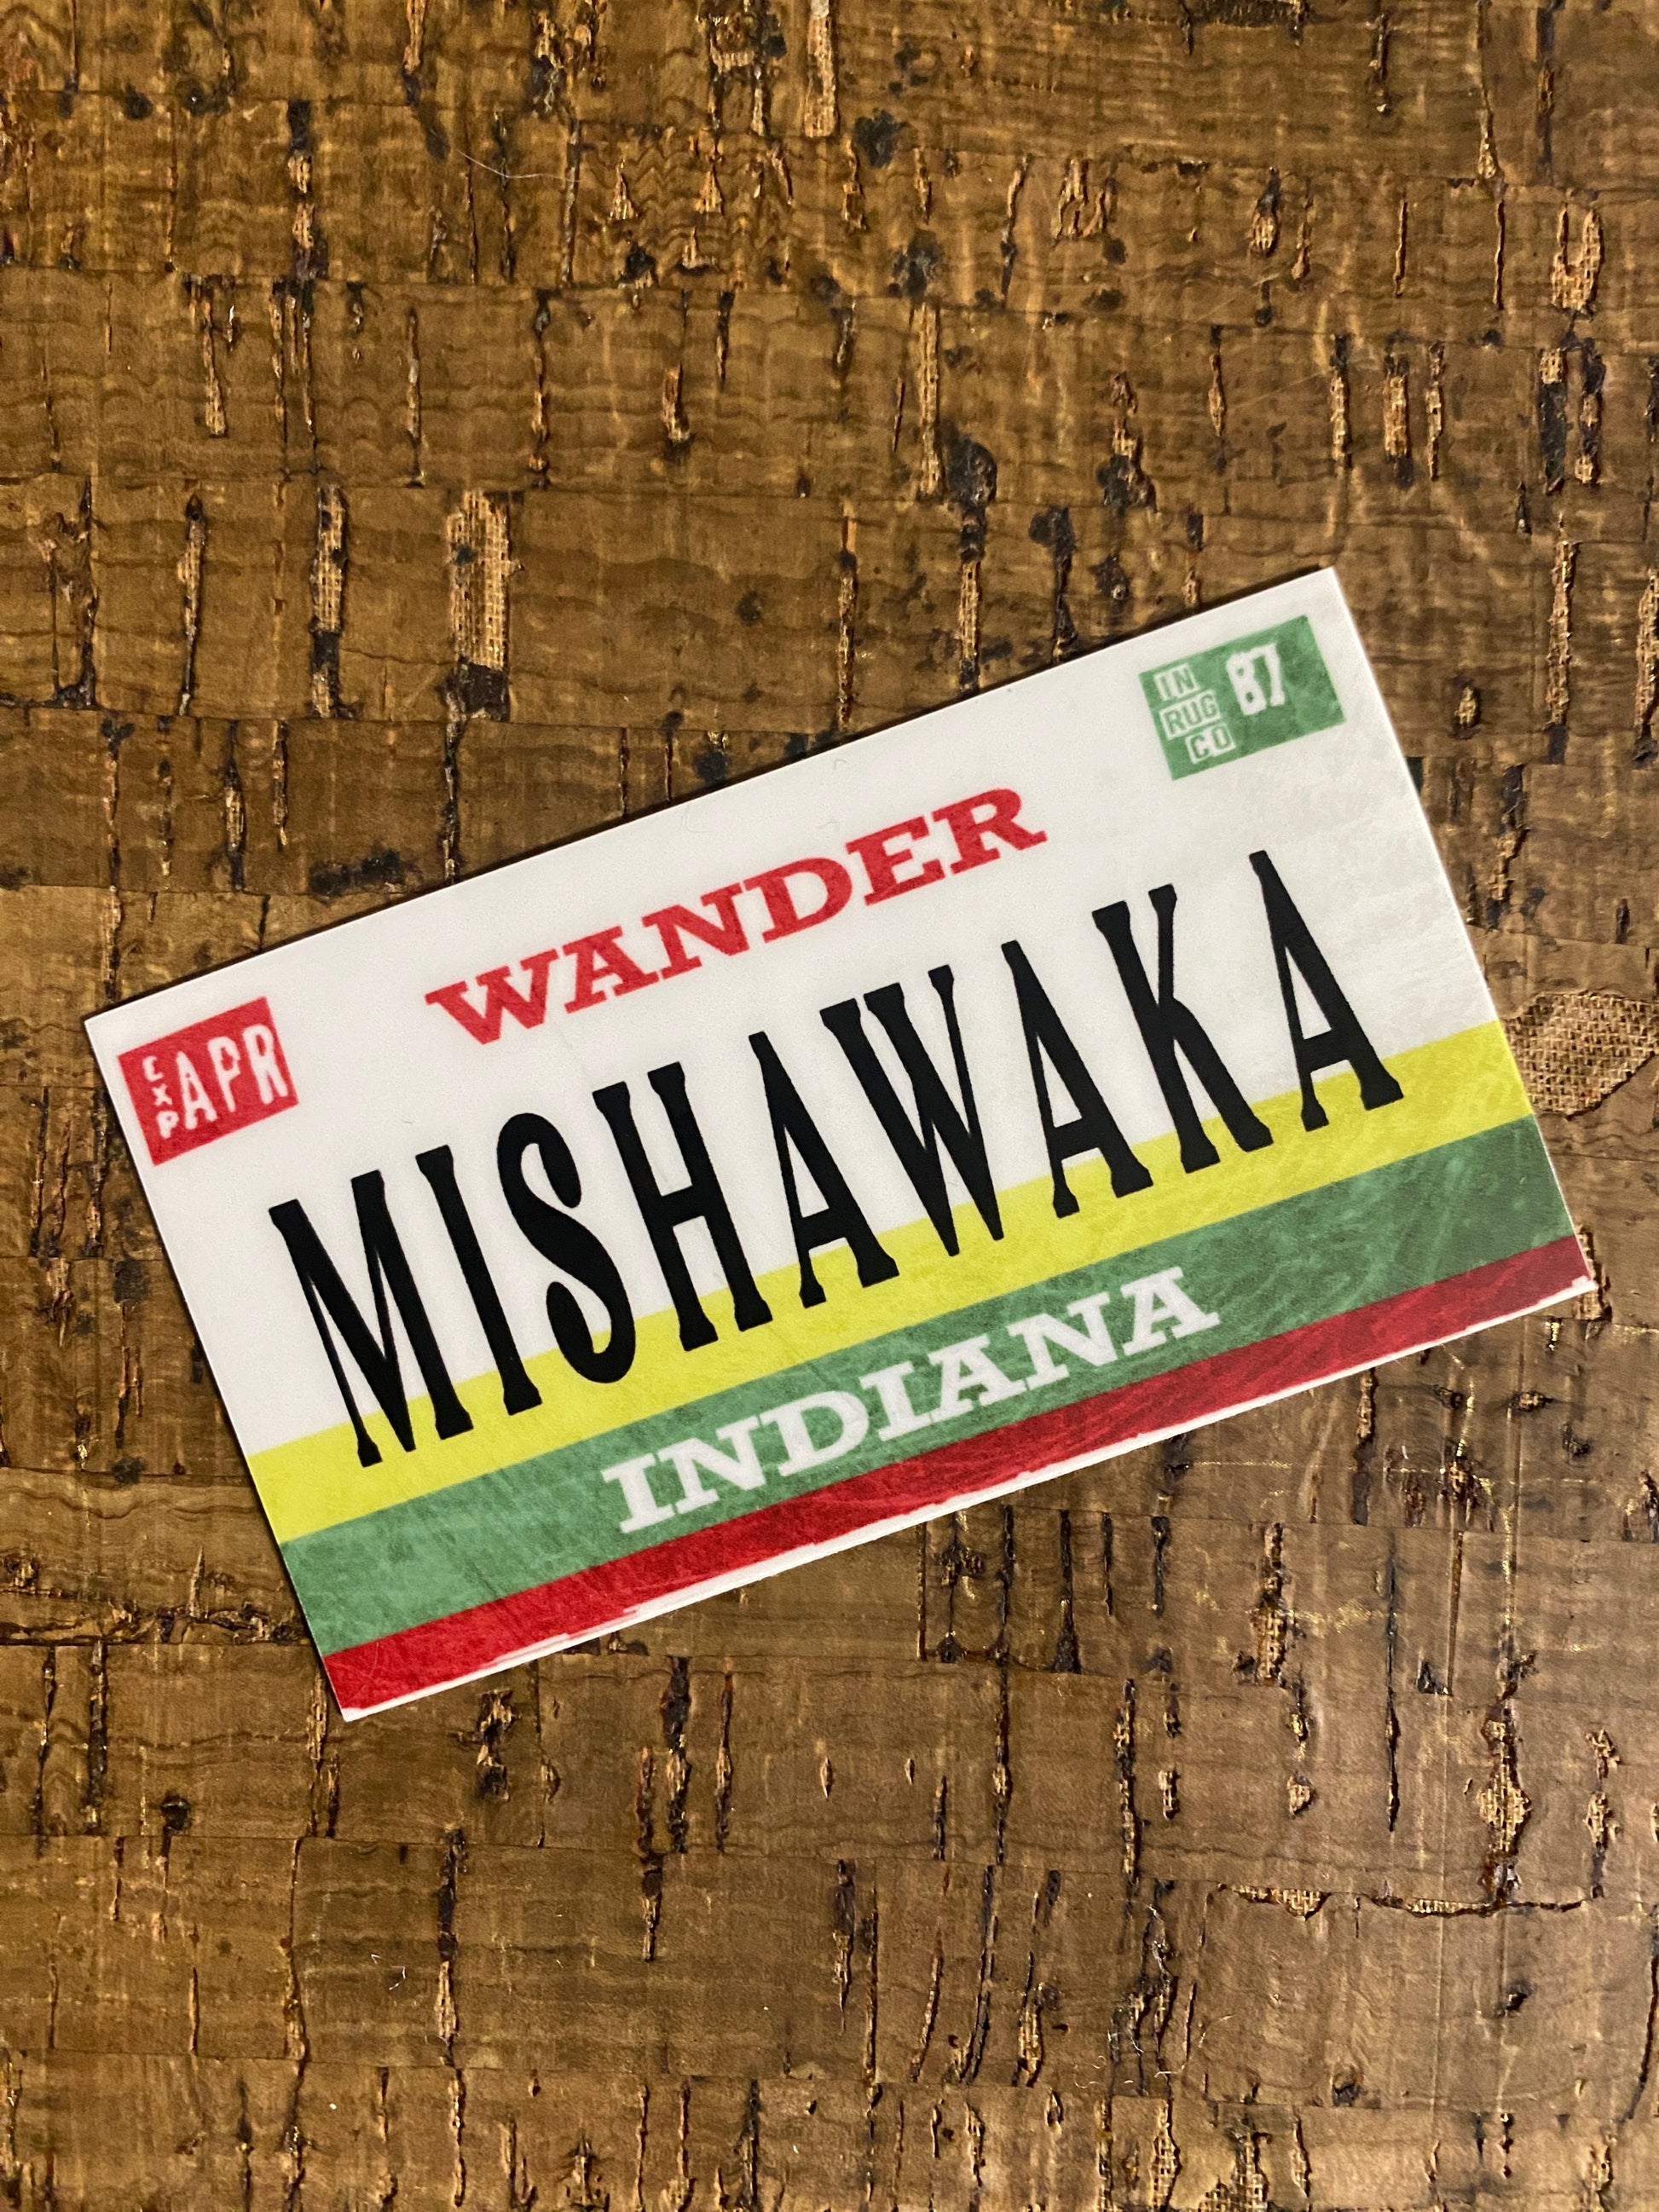 mishawaka indiana wander sticker